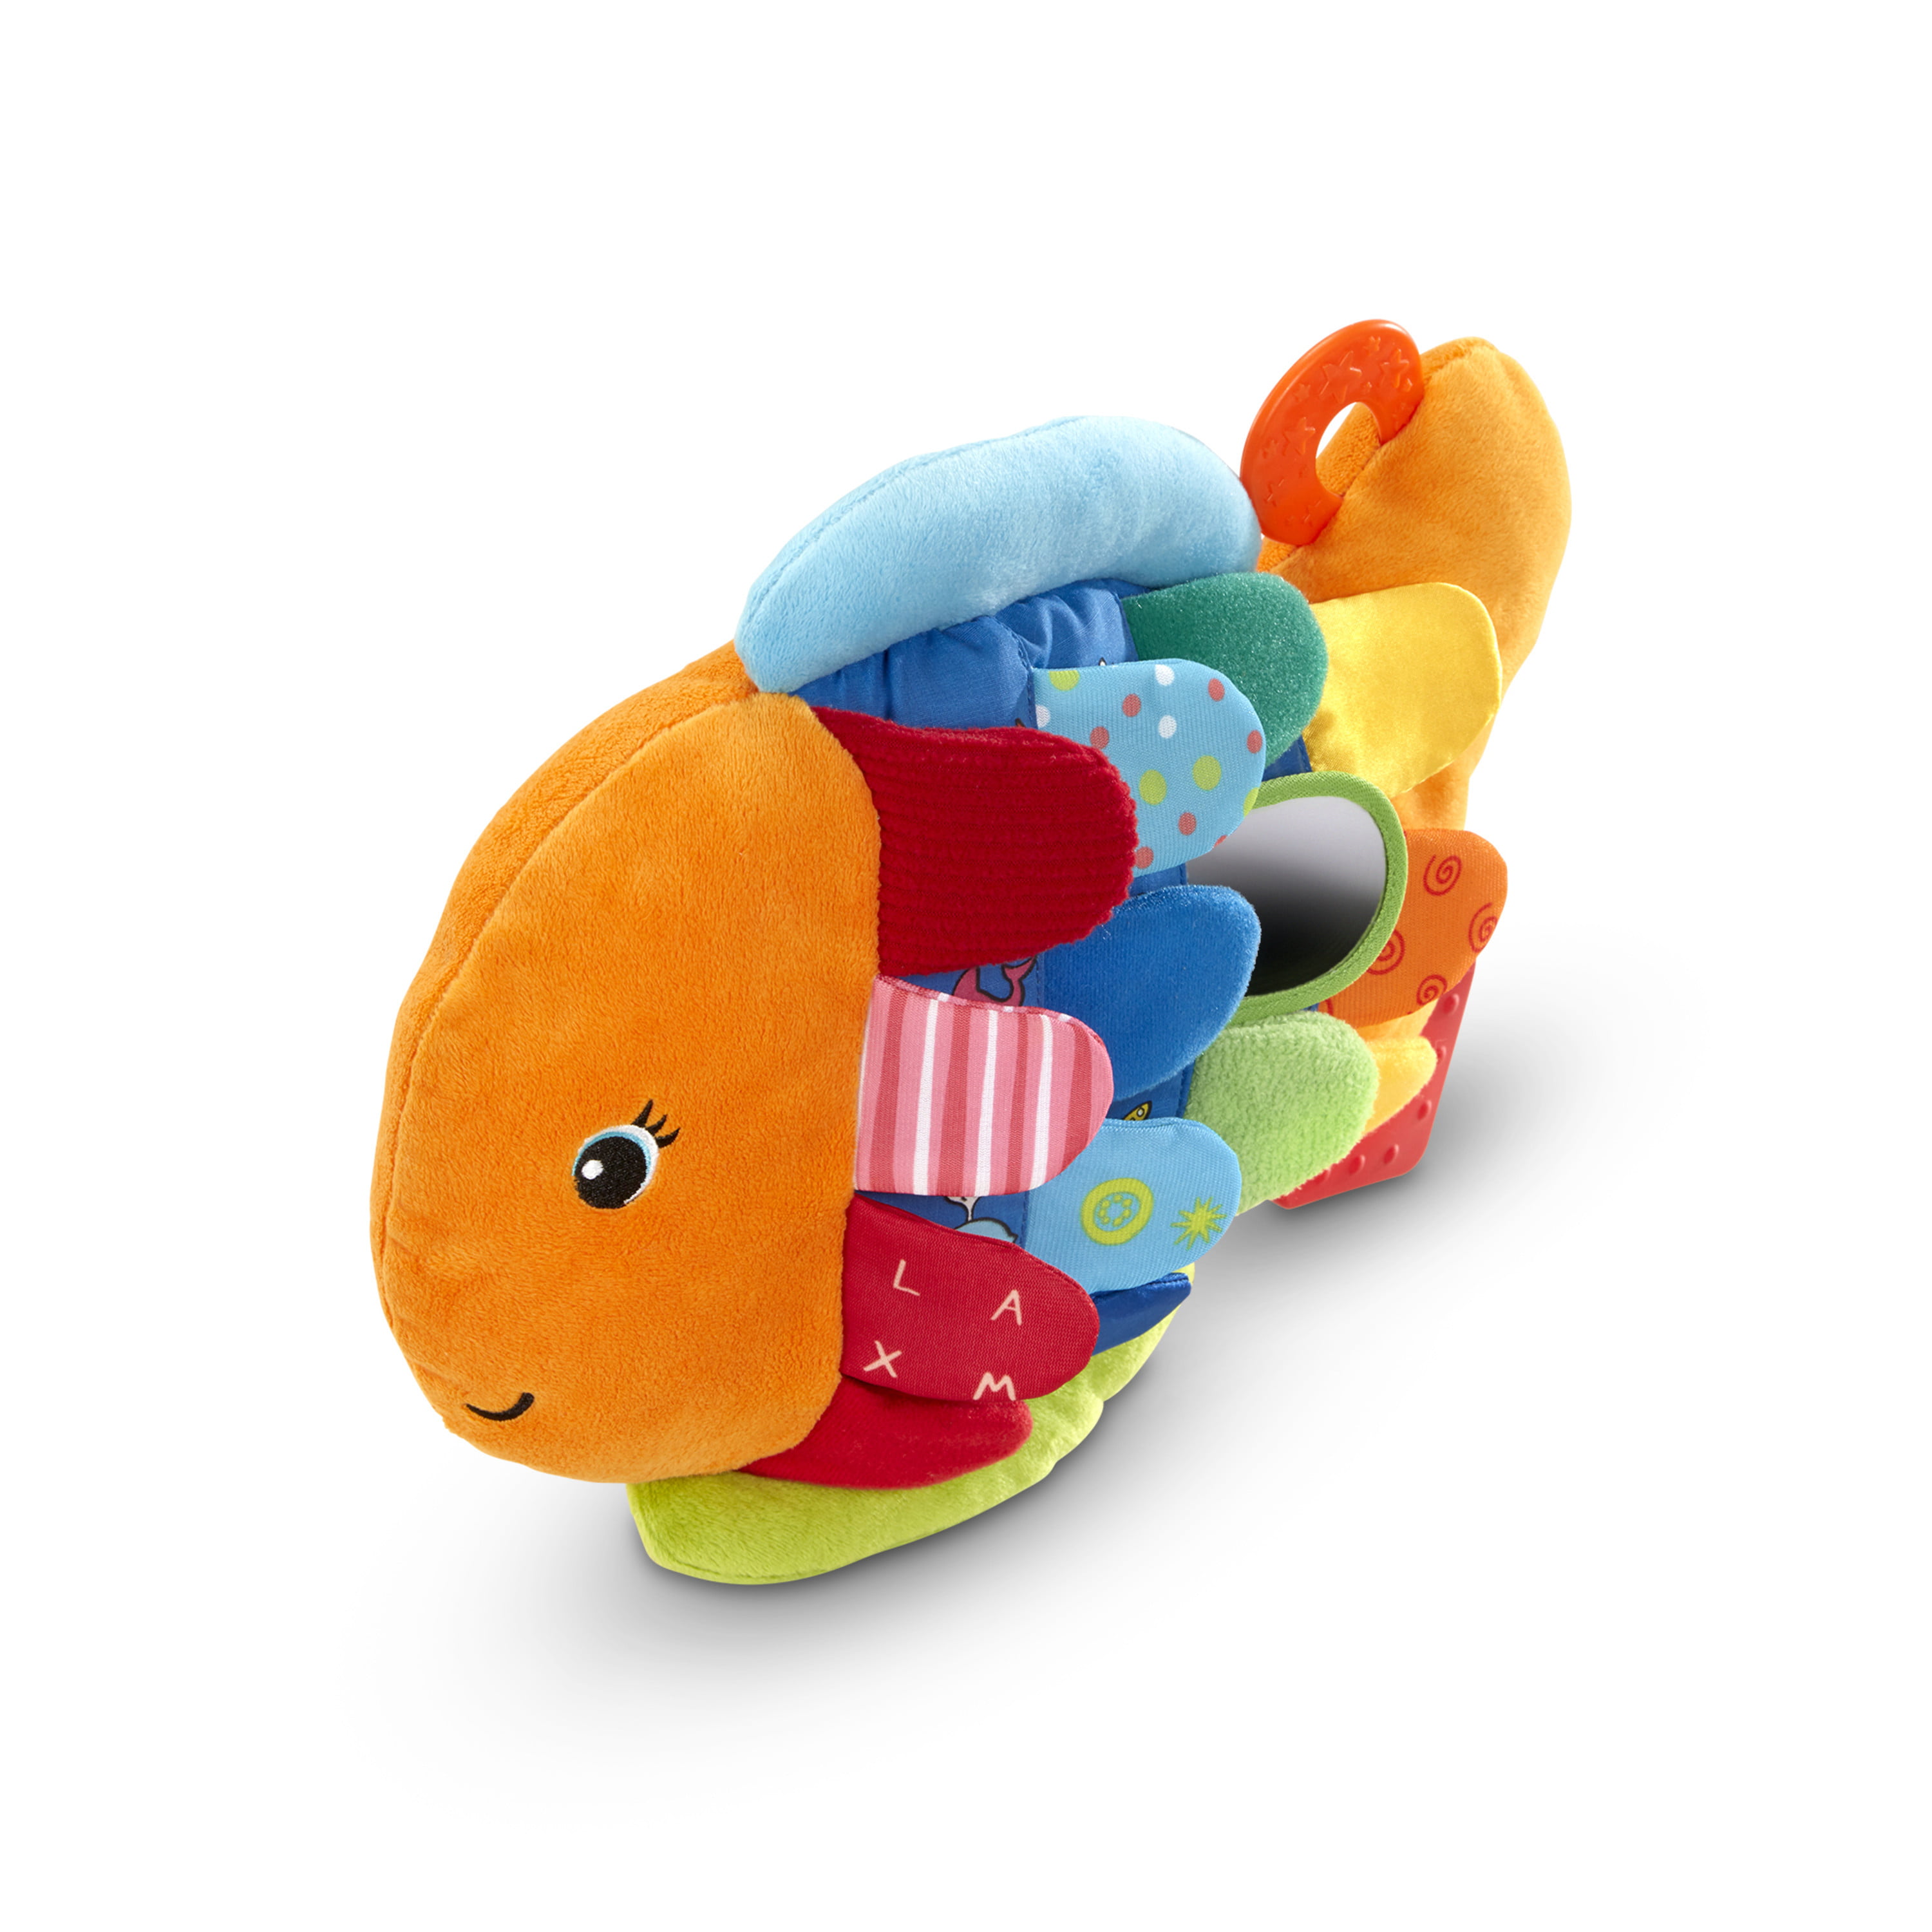 Melissa & Doug 9195 Flip Fish Soft Baby Toy for sale online 